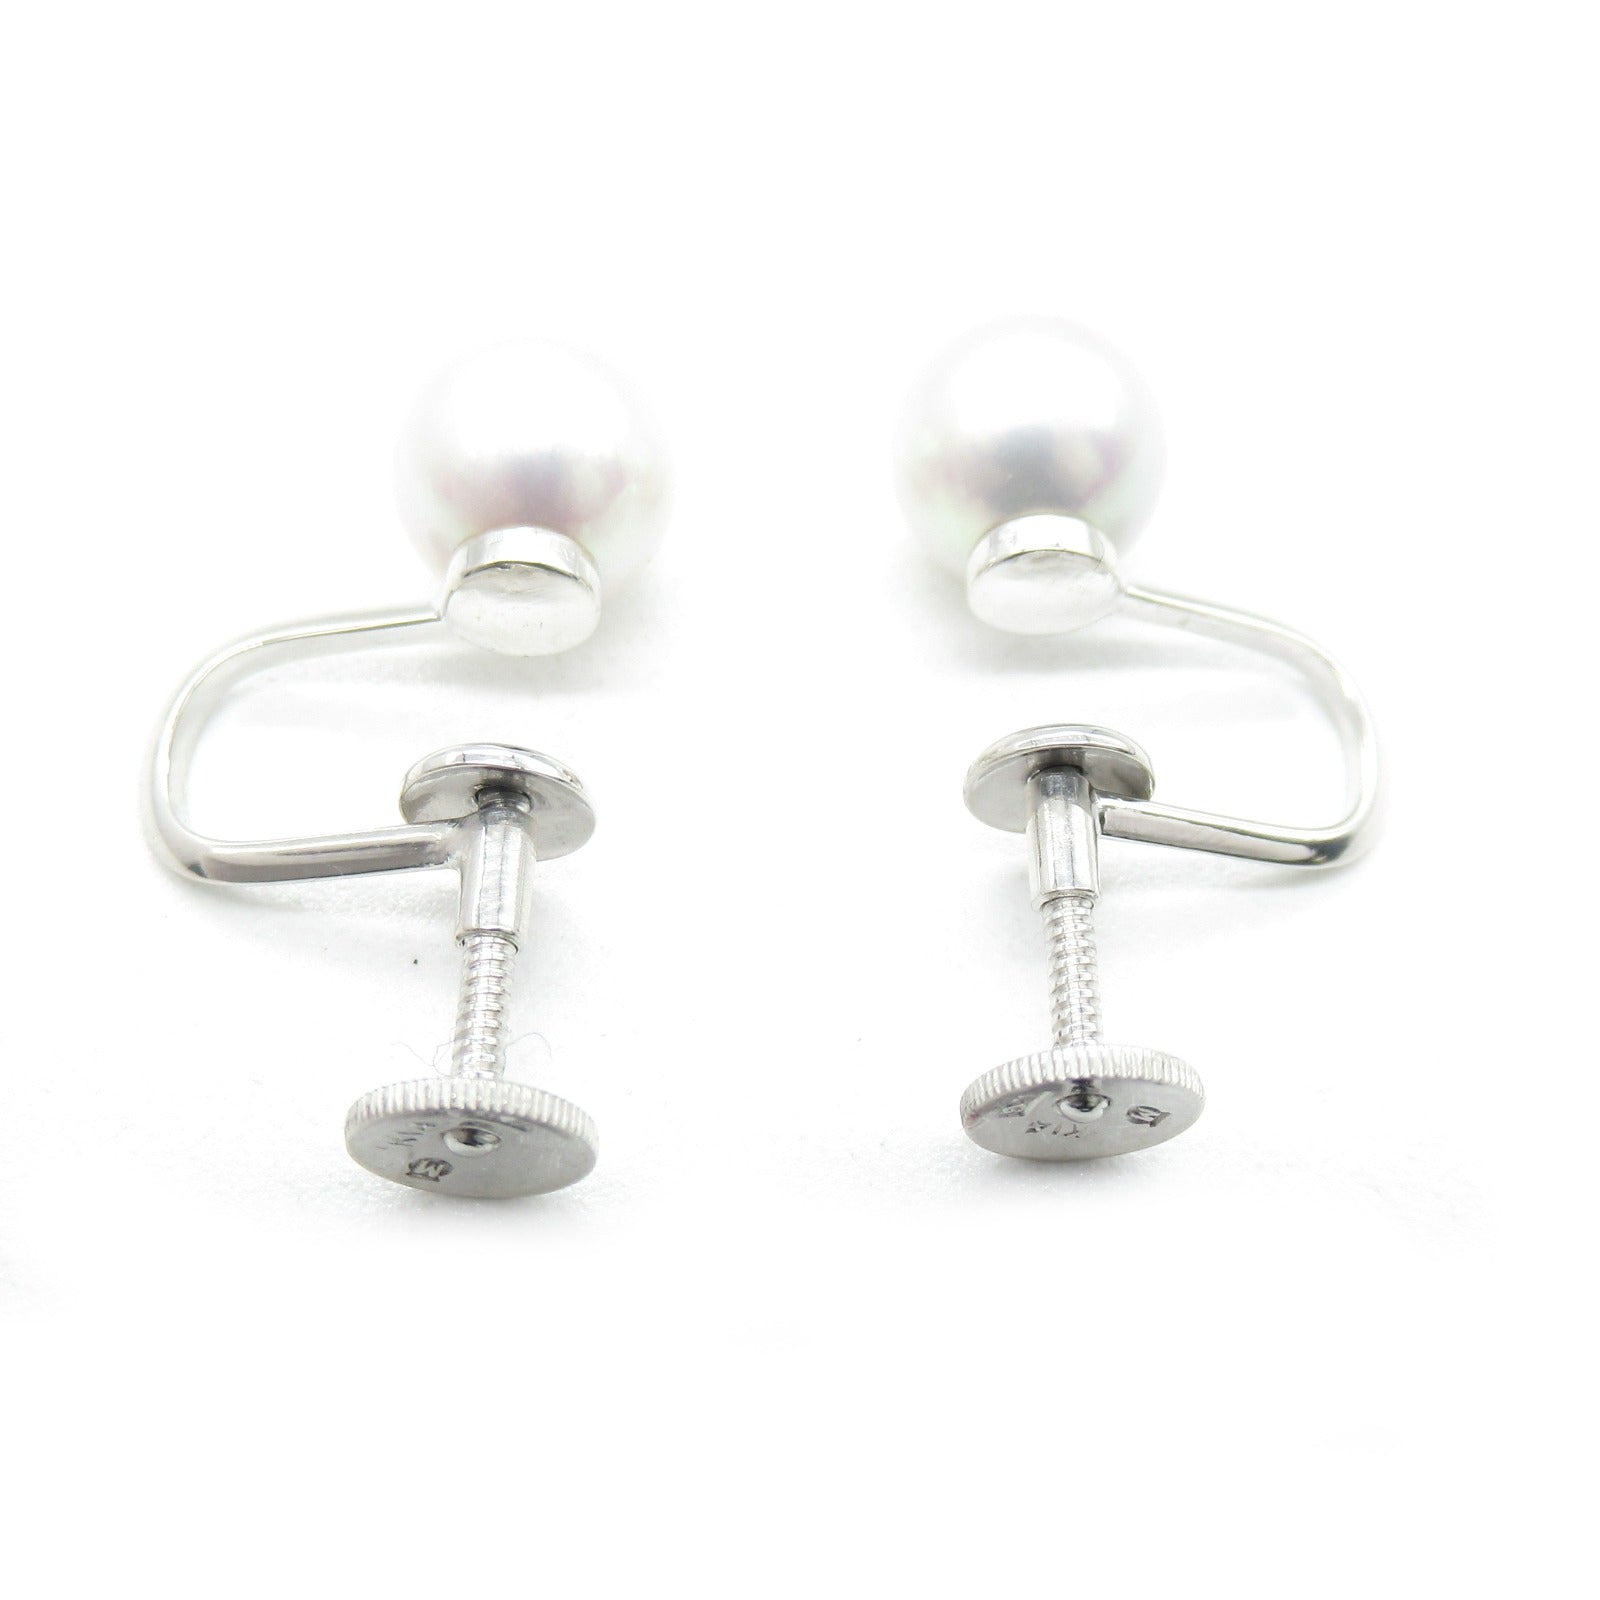 Mikimoto Pearl Earring Jewelry K14WG/Pearl  White